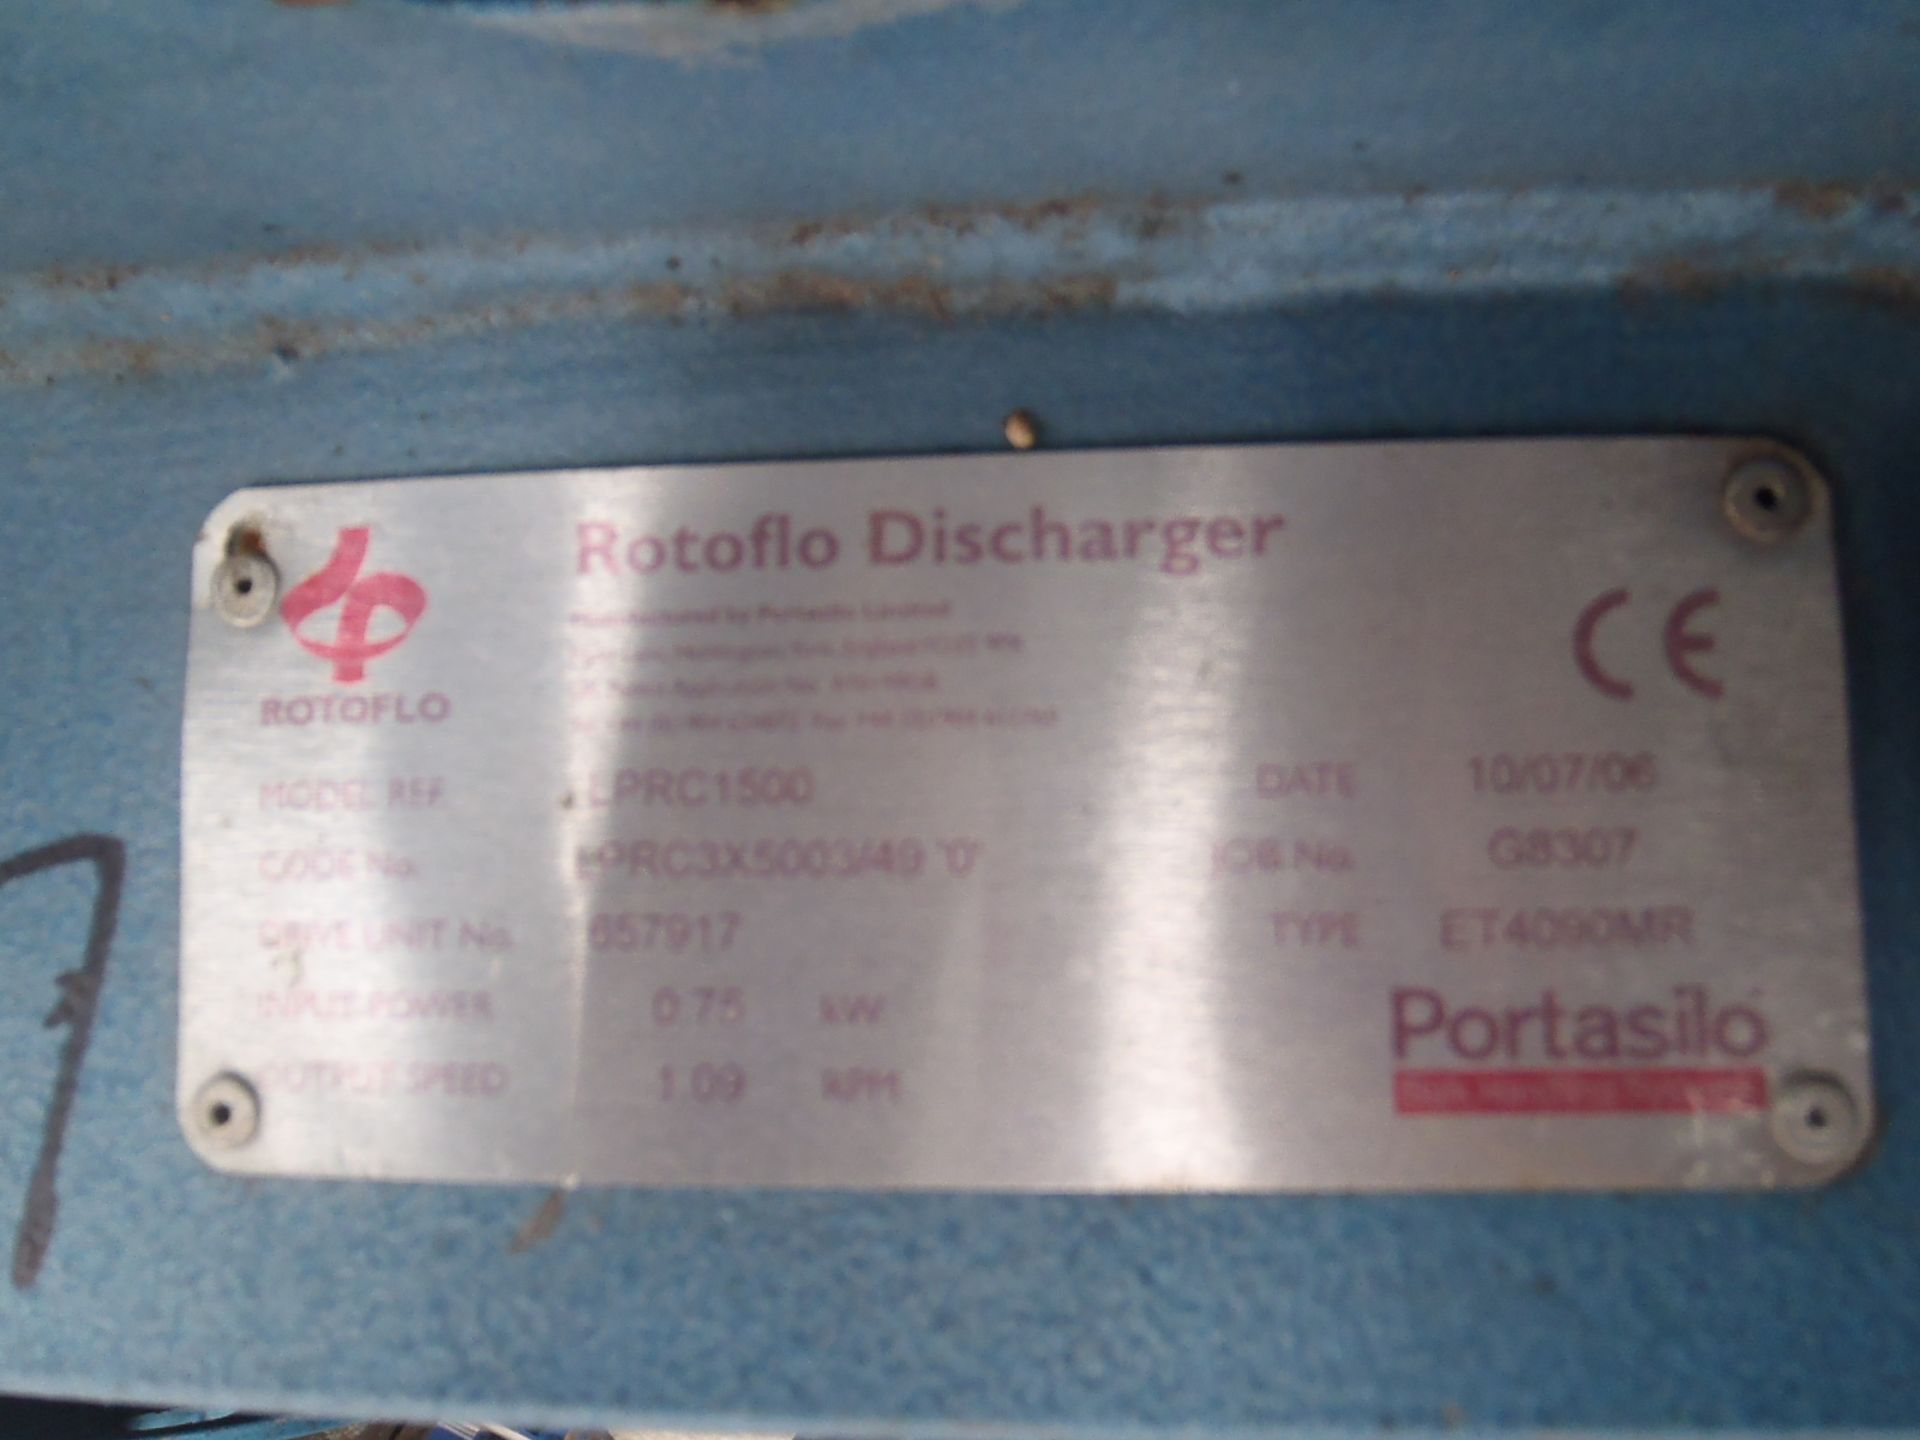 Rotoflo Discharger Model LPRC 1500 Discharger - Image 5 of 7